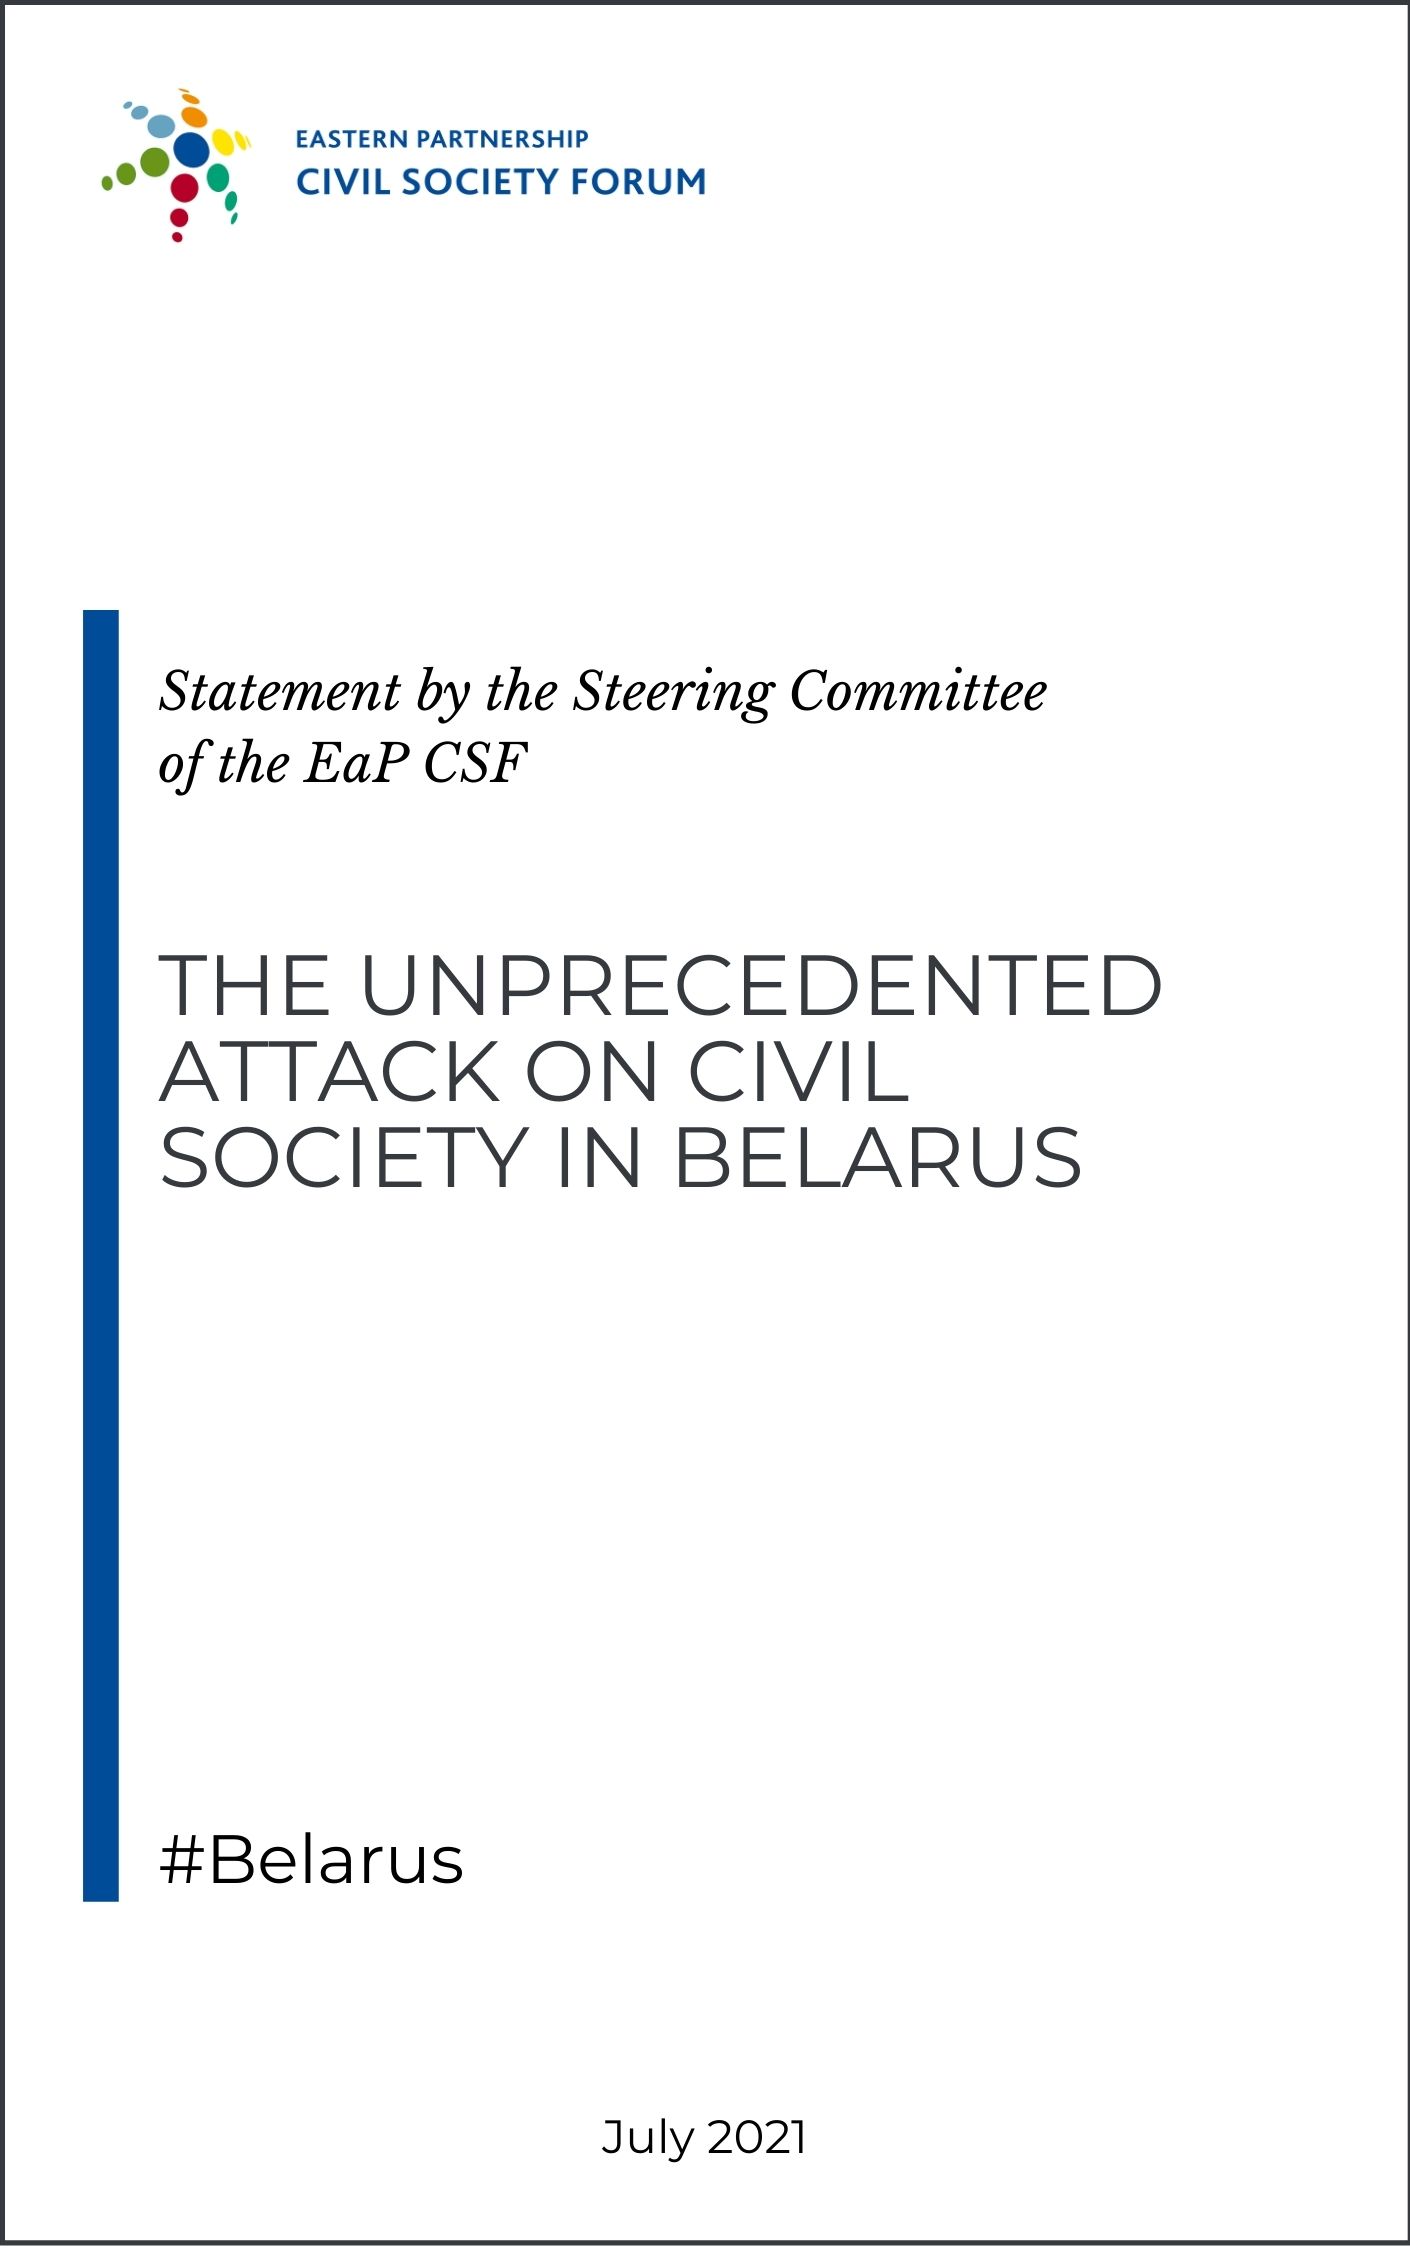 Statement on the unprecedented attack on civil society in Belarus